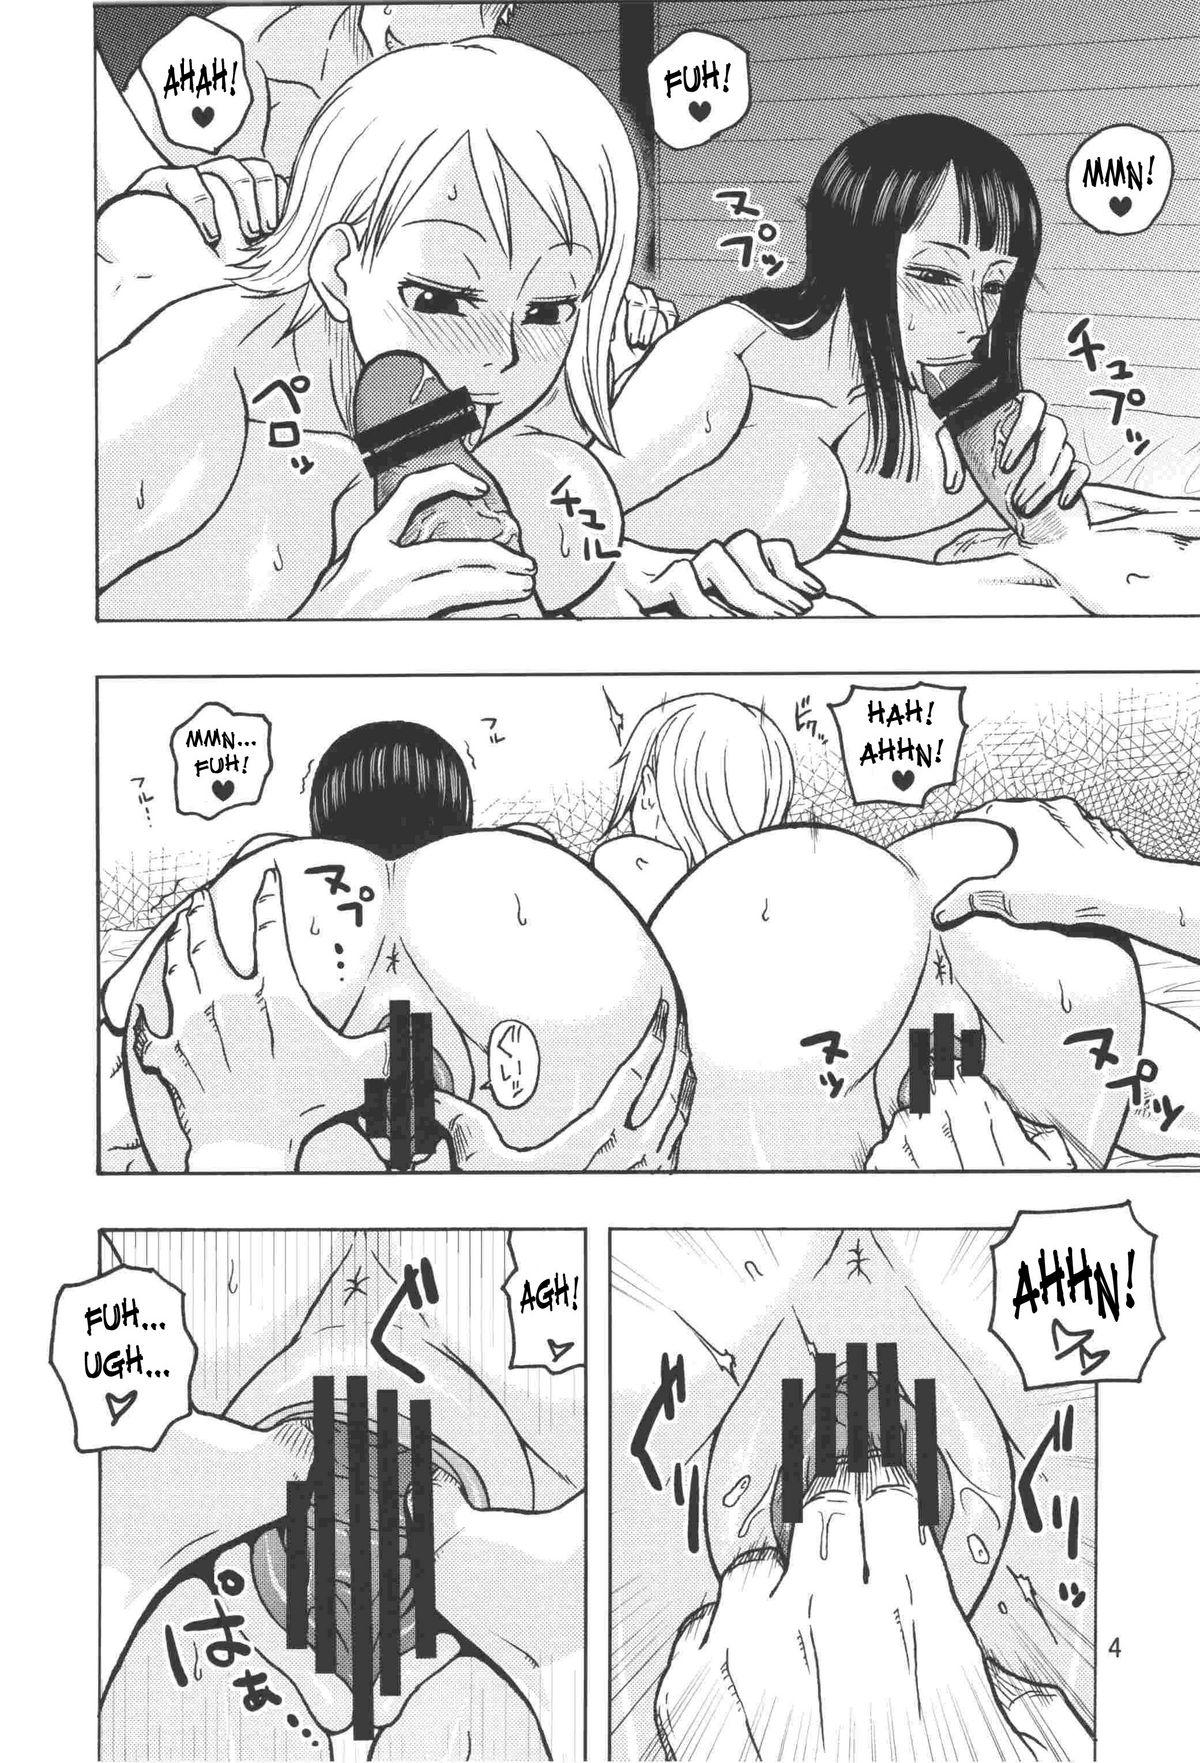 Pussy Play Nami no Koukai Nisshi EX NamiRobi 2 - One piece 18yearsold - Page 5